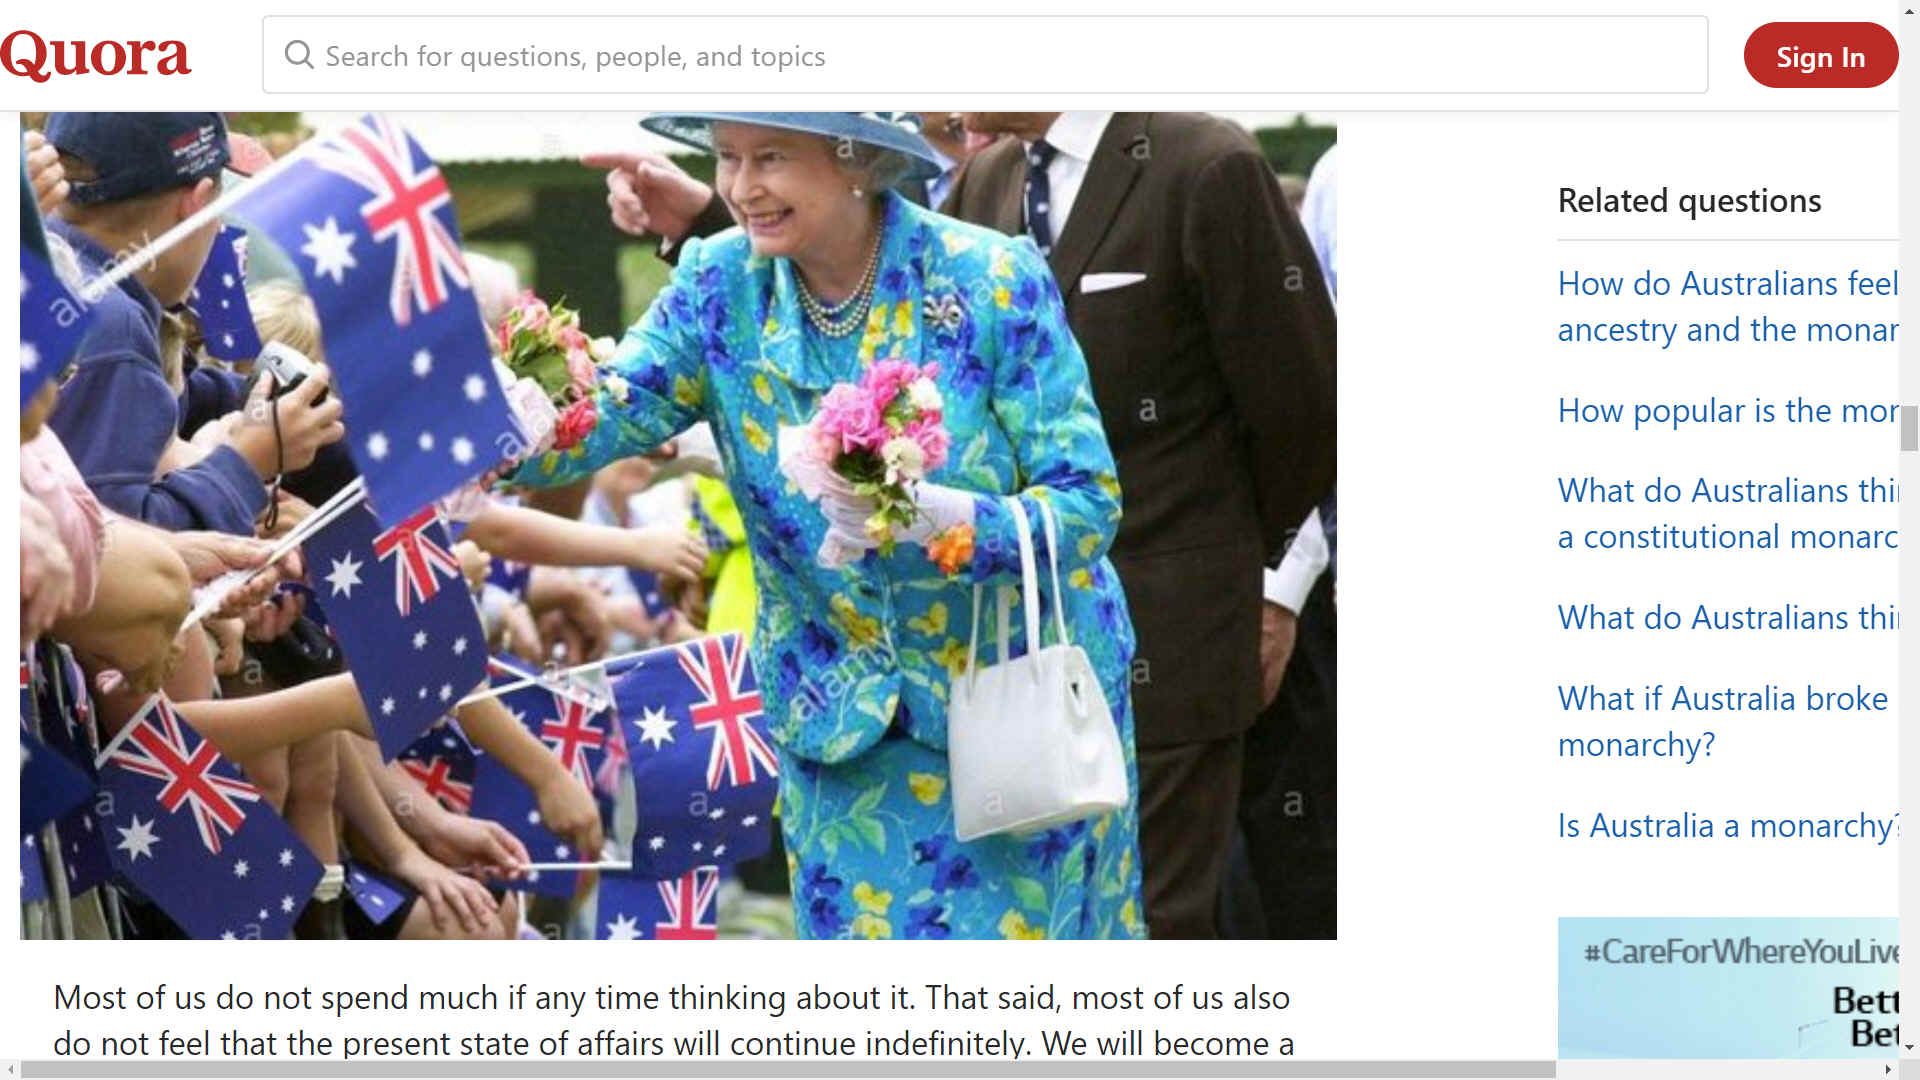 Queen Elizabeth, PR, on tour in Australian Commonwealth